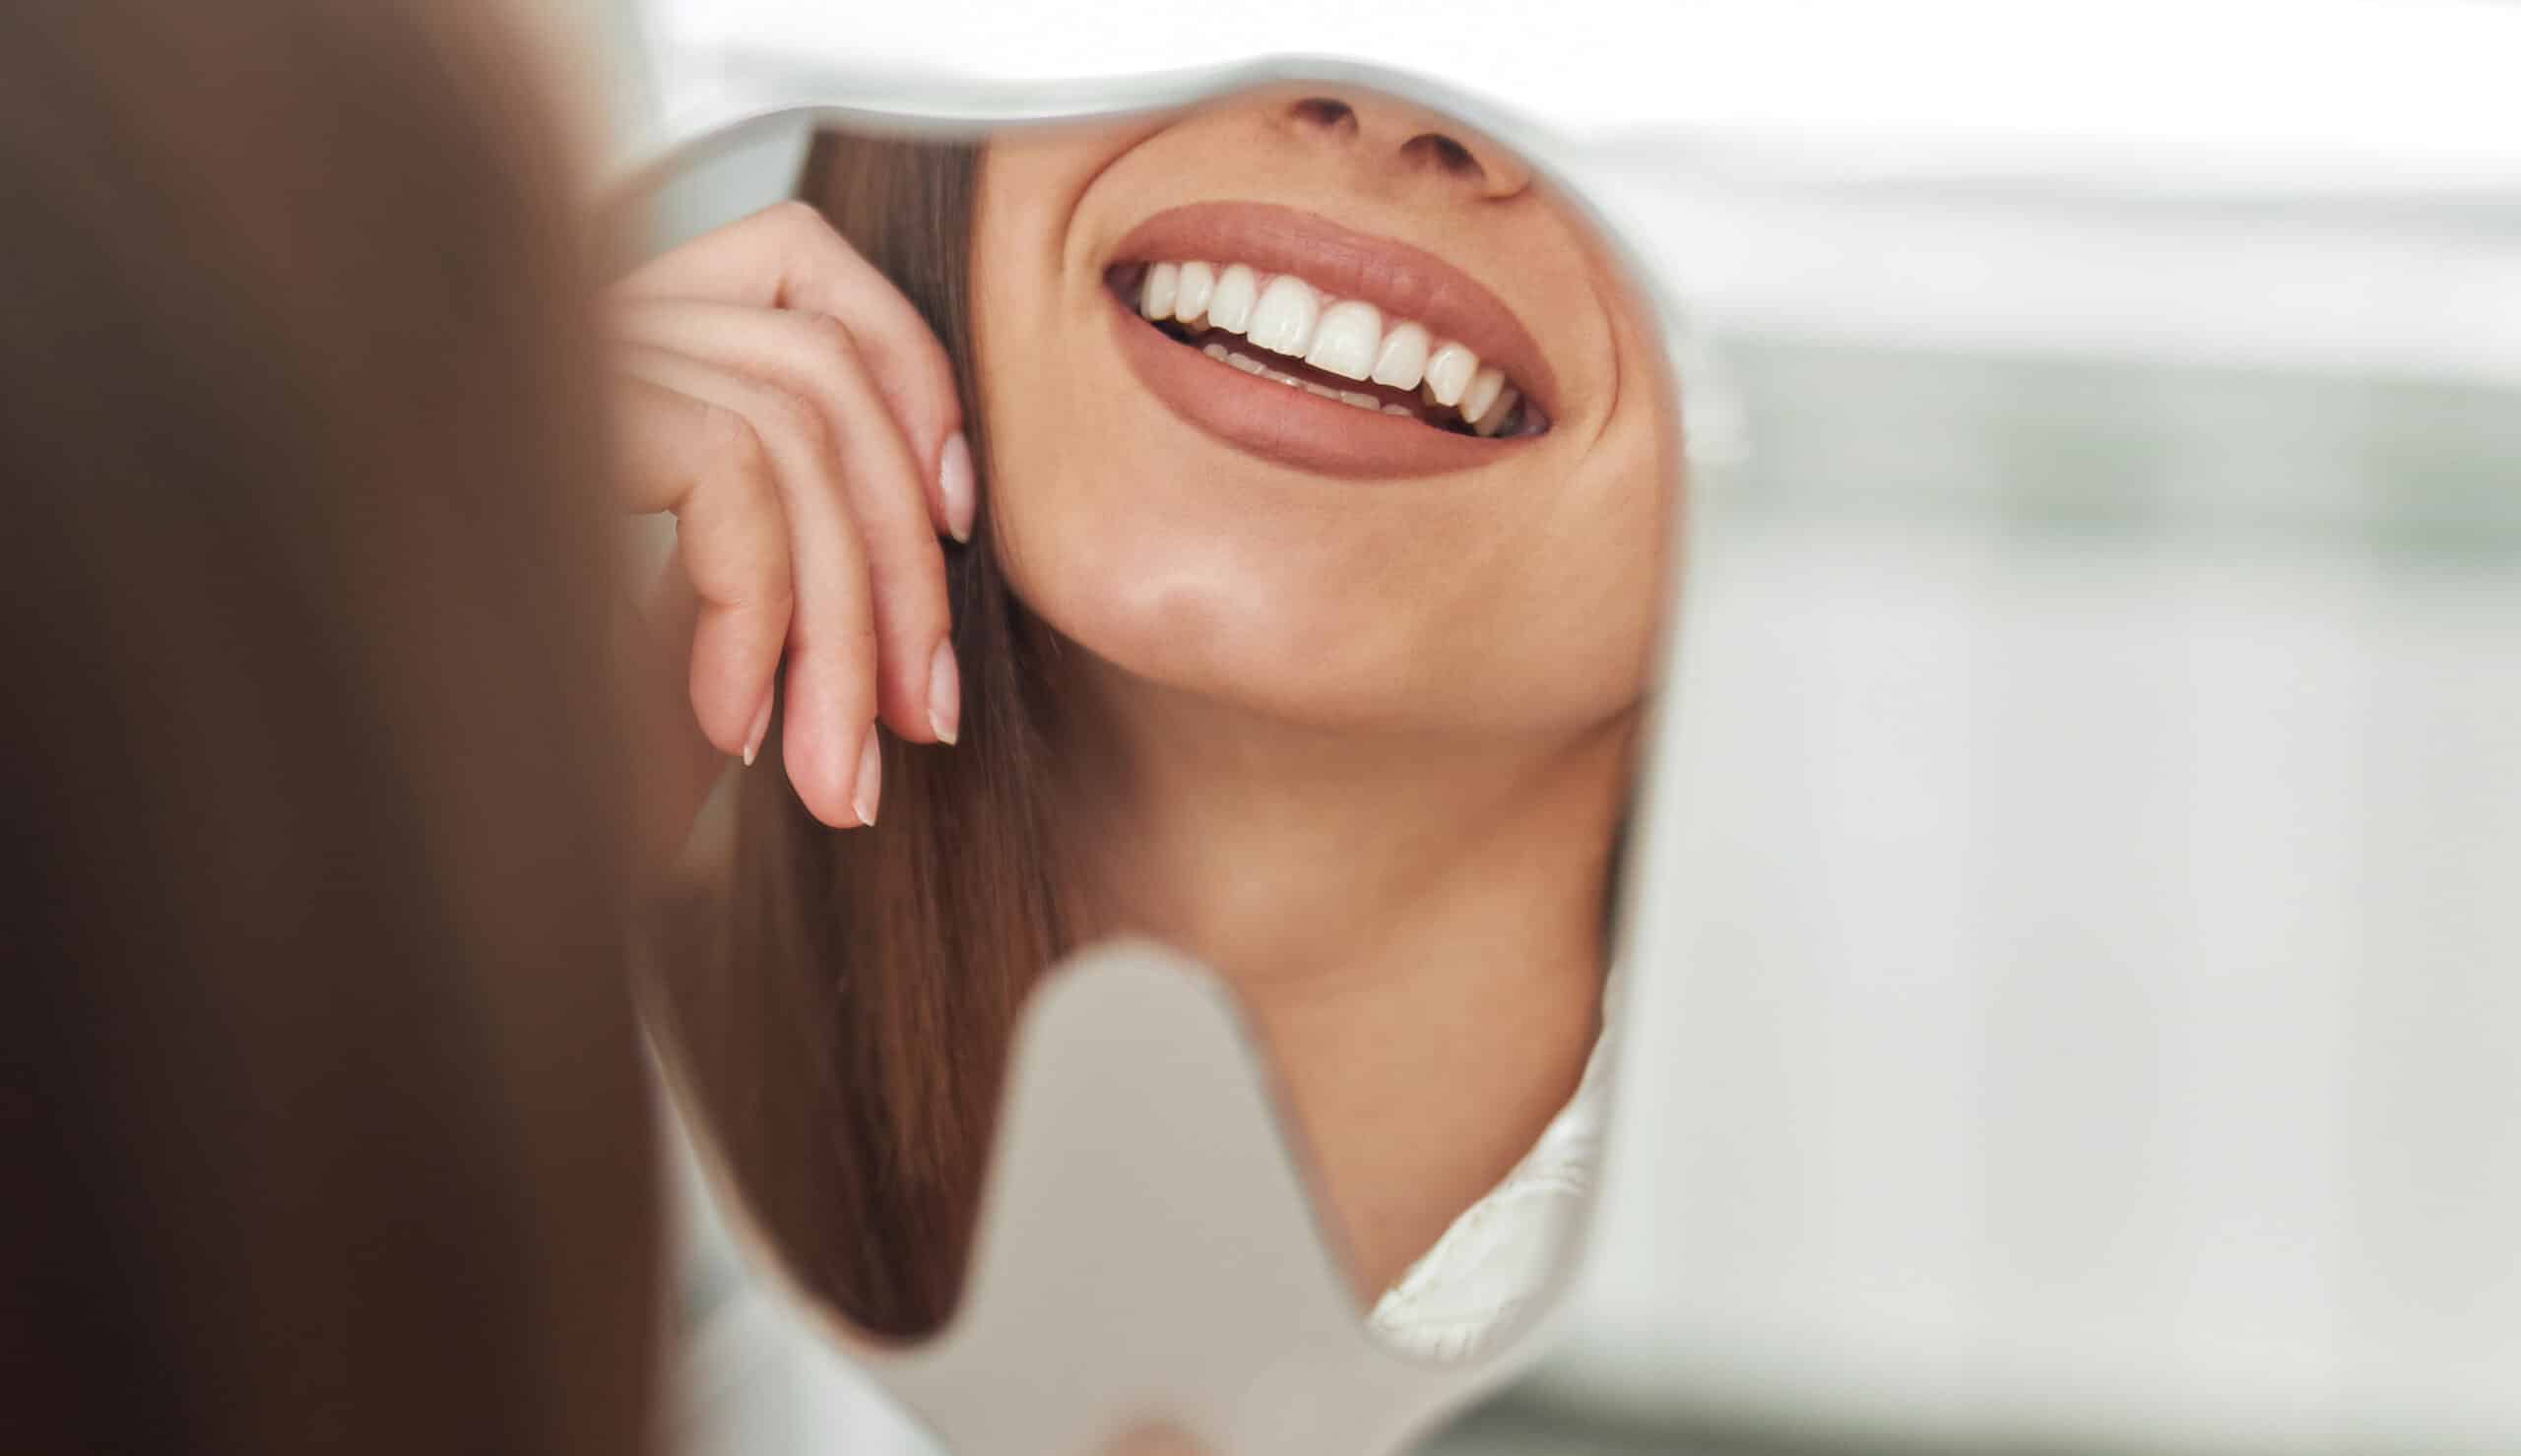 teeth whitening omaha Dr. Lauren Semerad Dr. Maggie Larsen. Legacy Dental. General, Family, Cosmetic, Sedation, Restorative, Preventative Dentistry, Dental Implants in Omaha, NE 68130